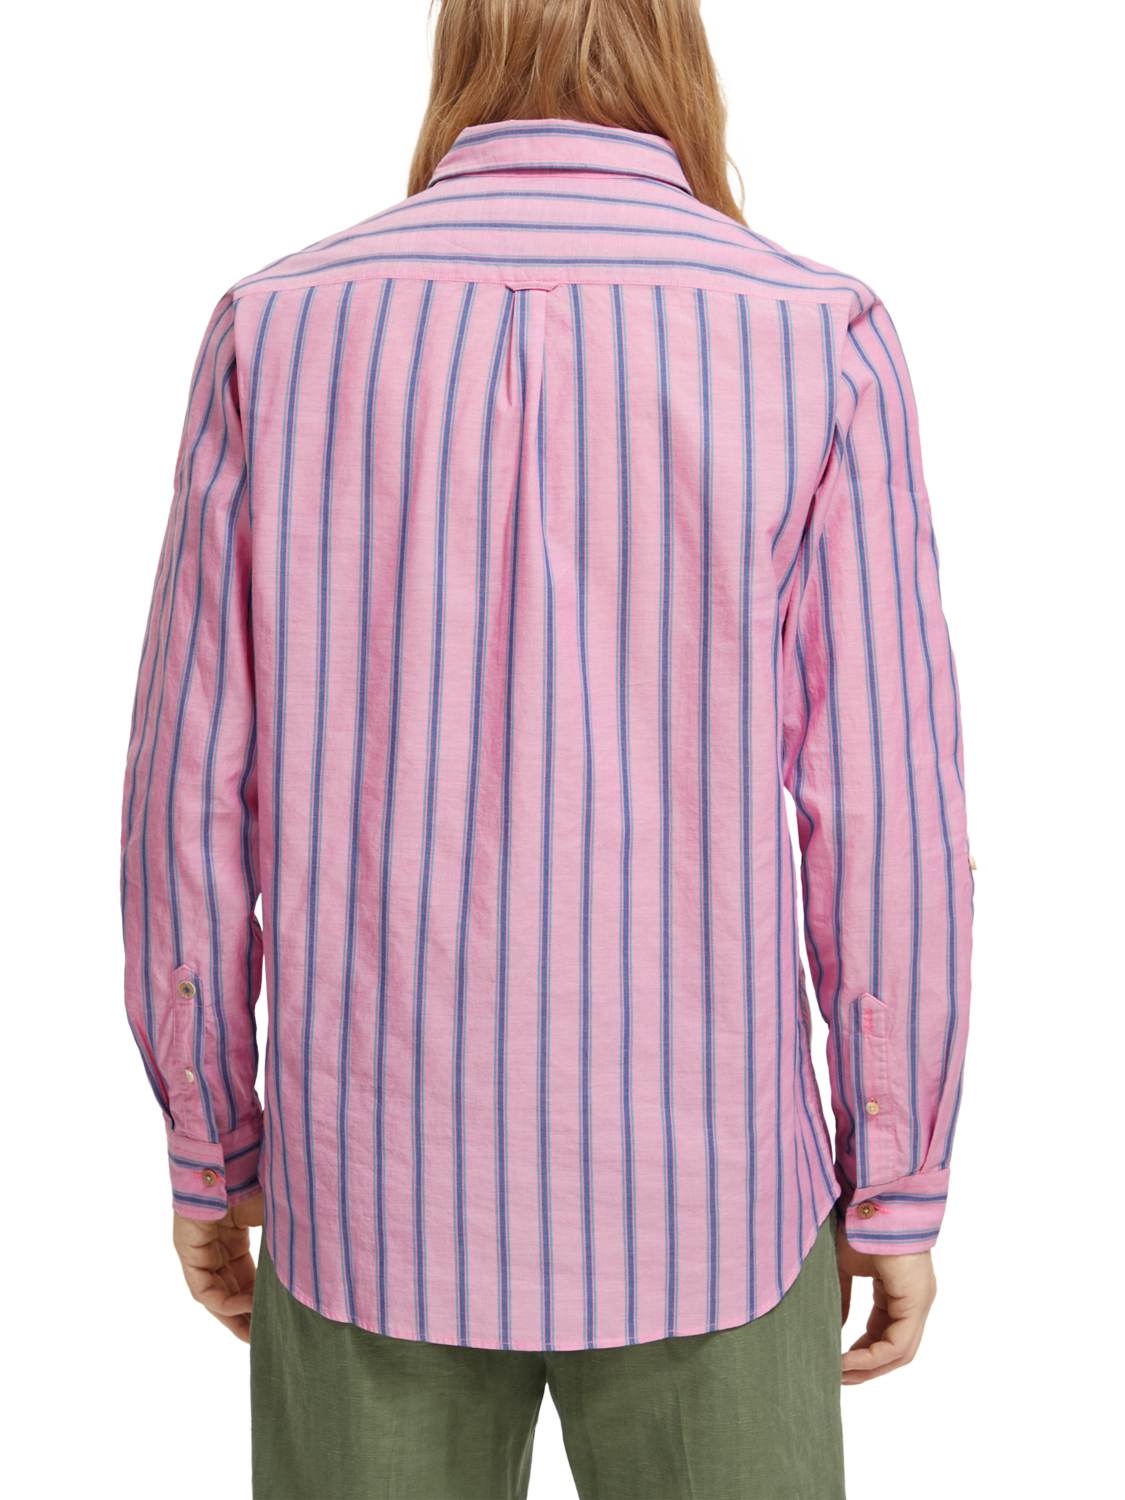 Scotch & Soda - Striped Shirt - Pink/Multi Stripe